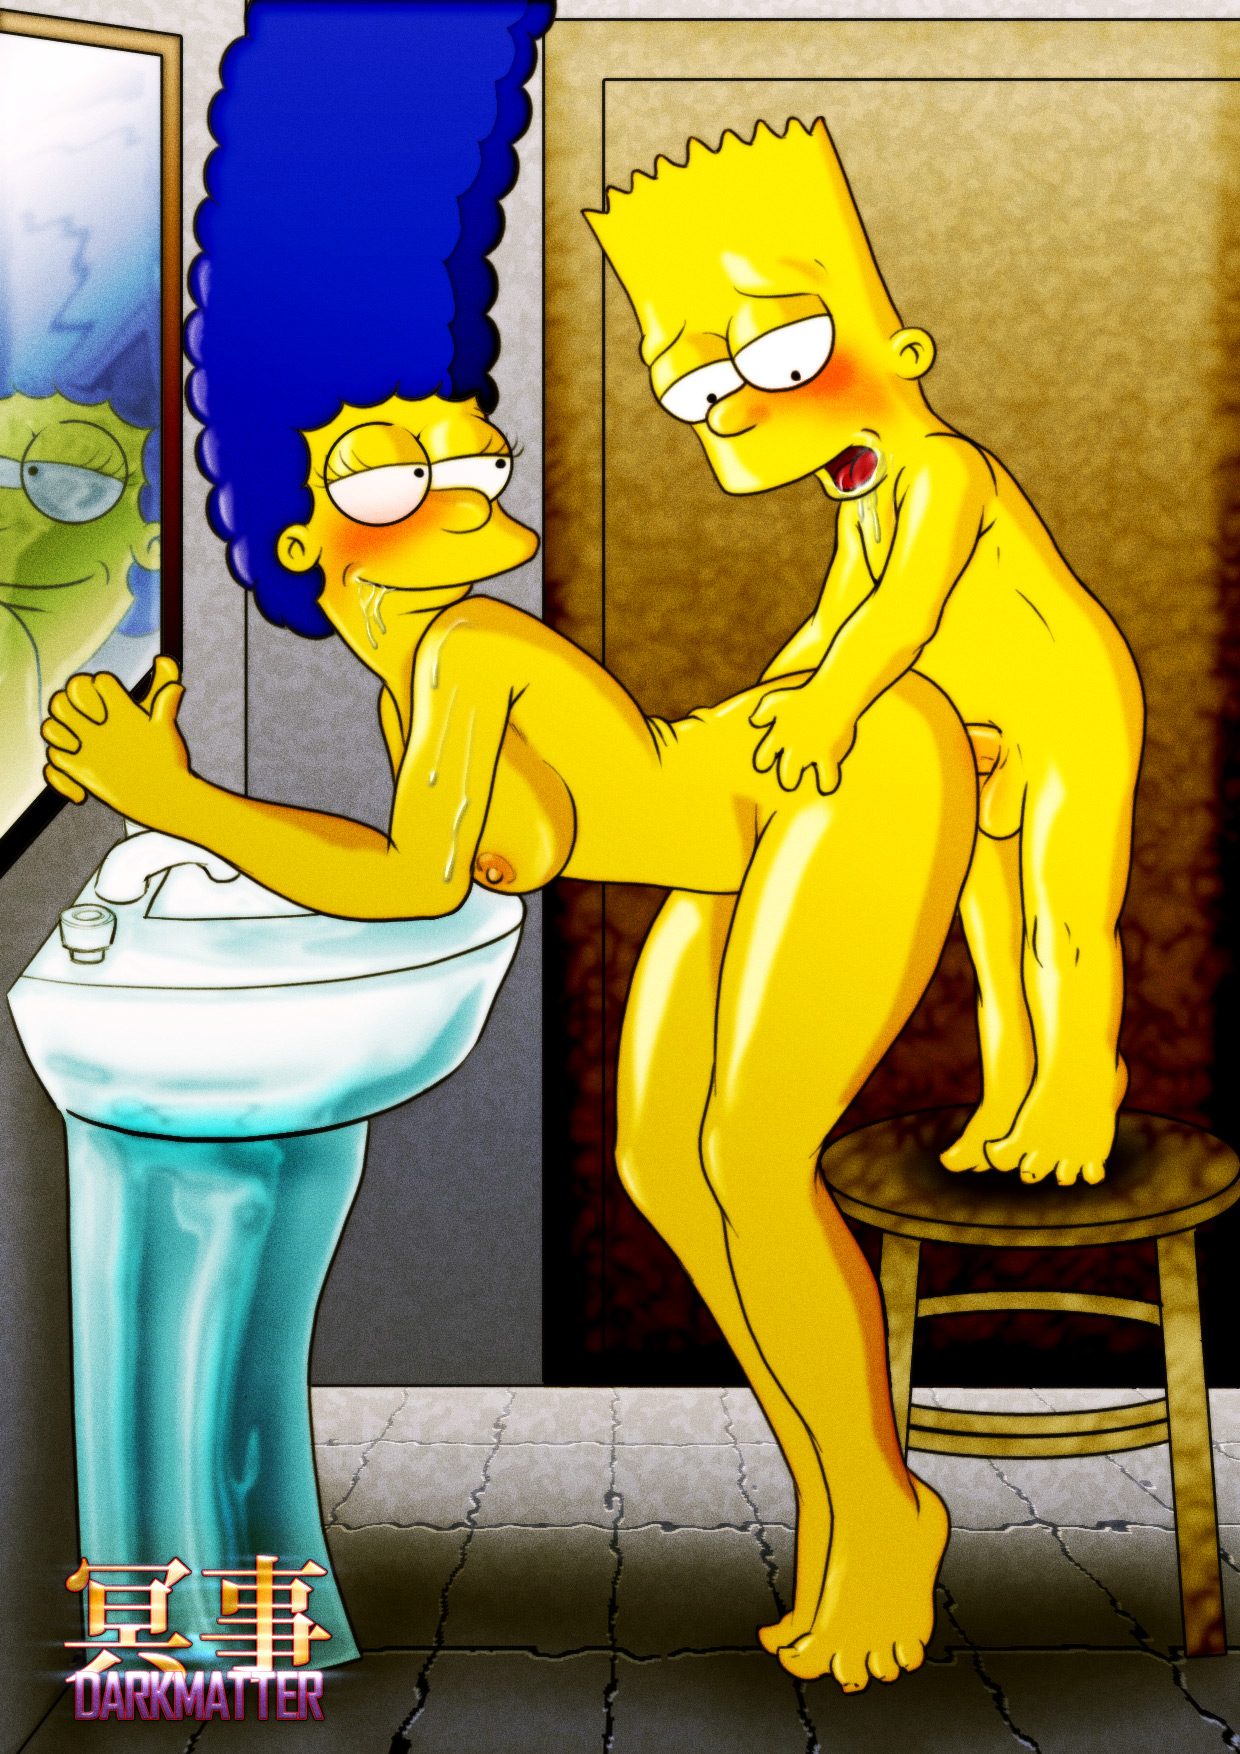 165_390412_Bart_Simpson_Darkmatter_Marge_Simpson_The_Simpsons